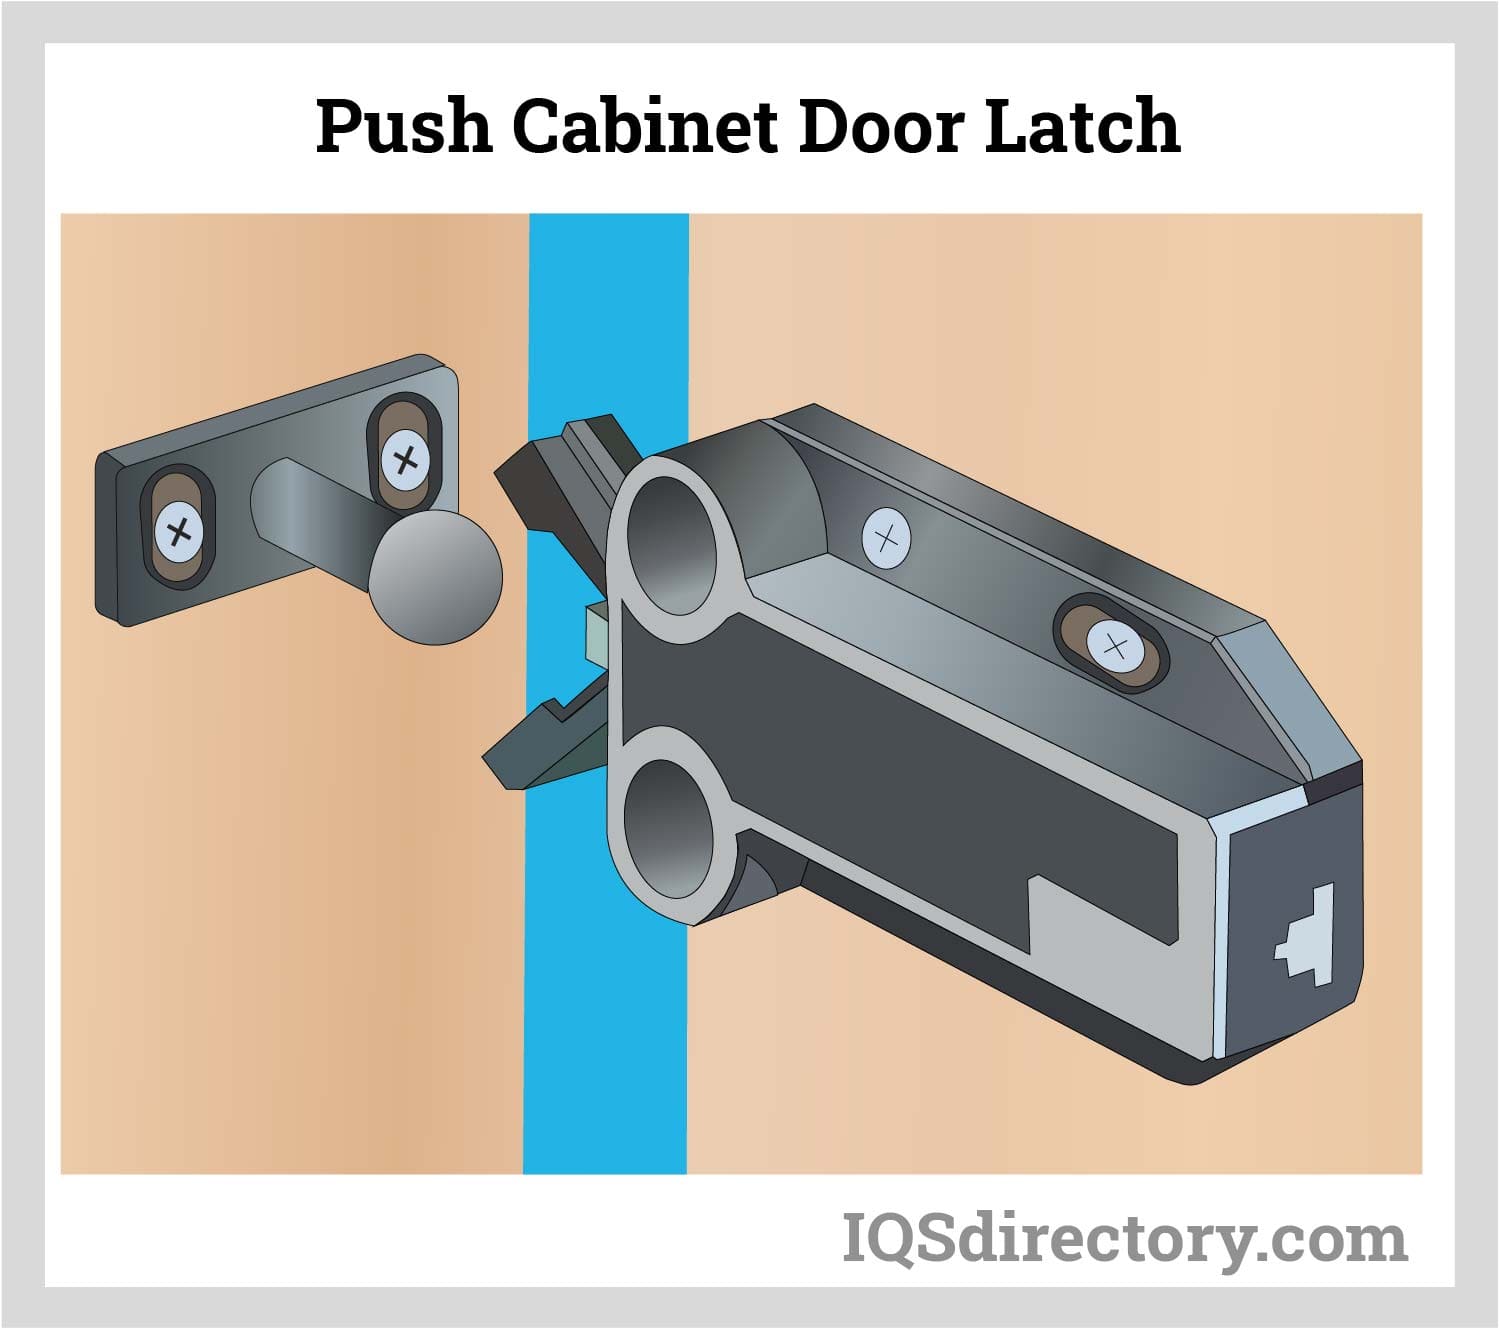 Push Cabinet Door Latch